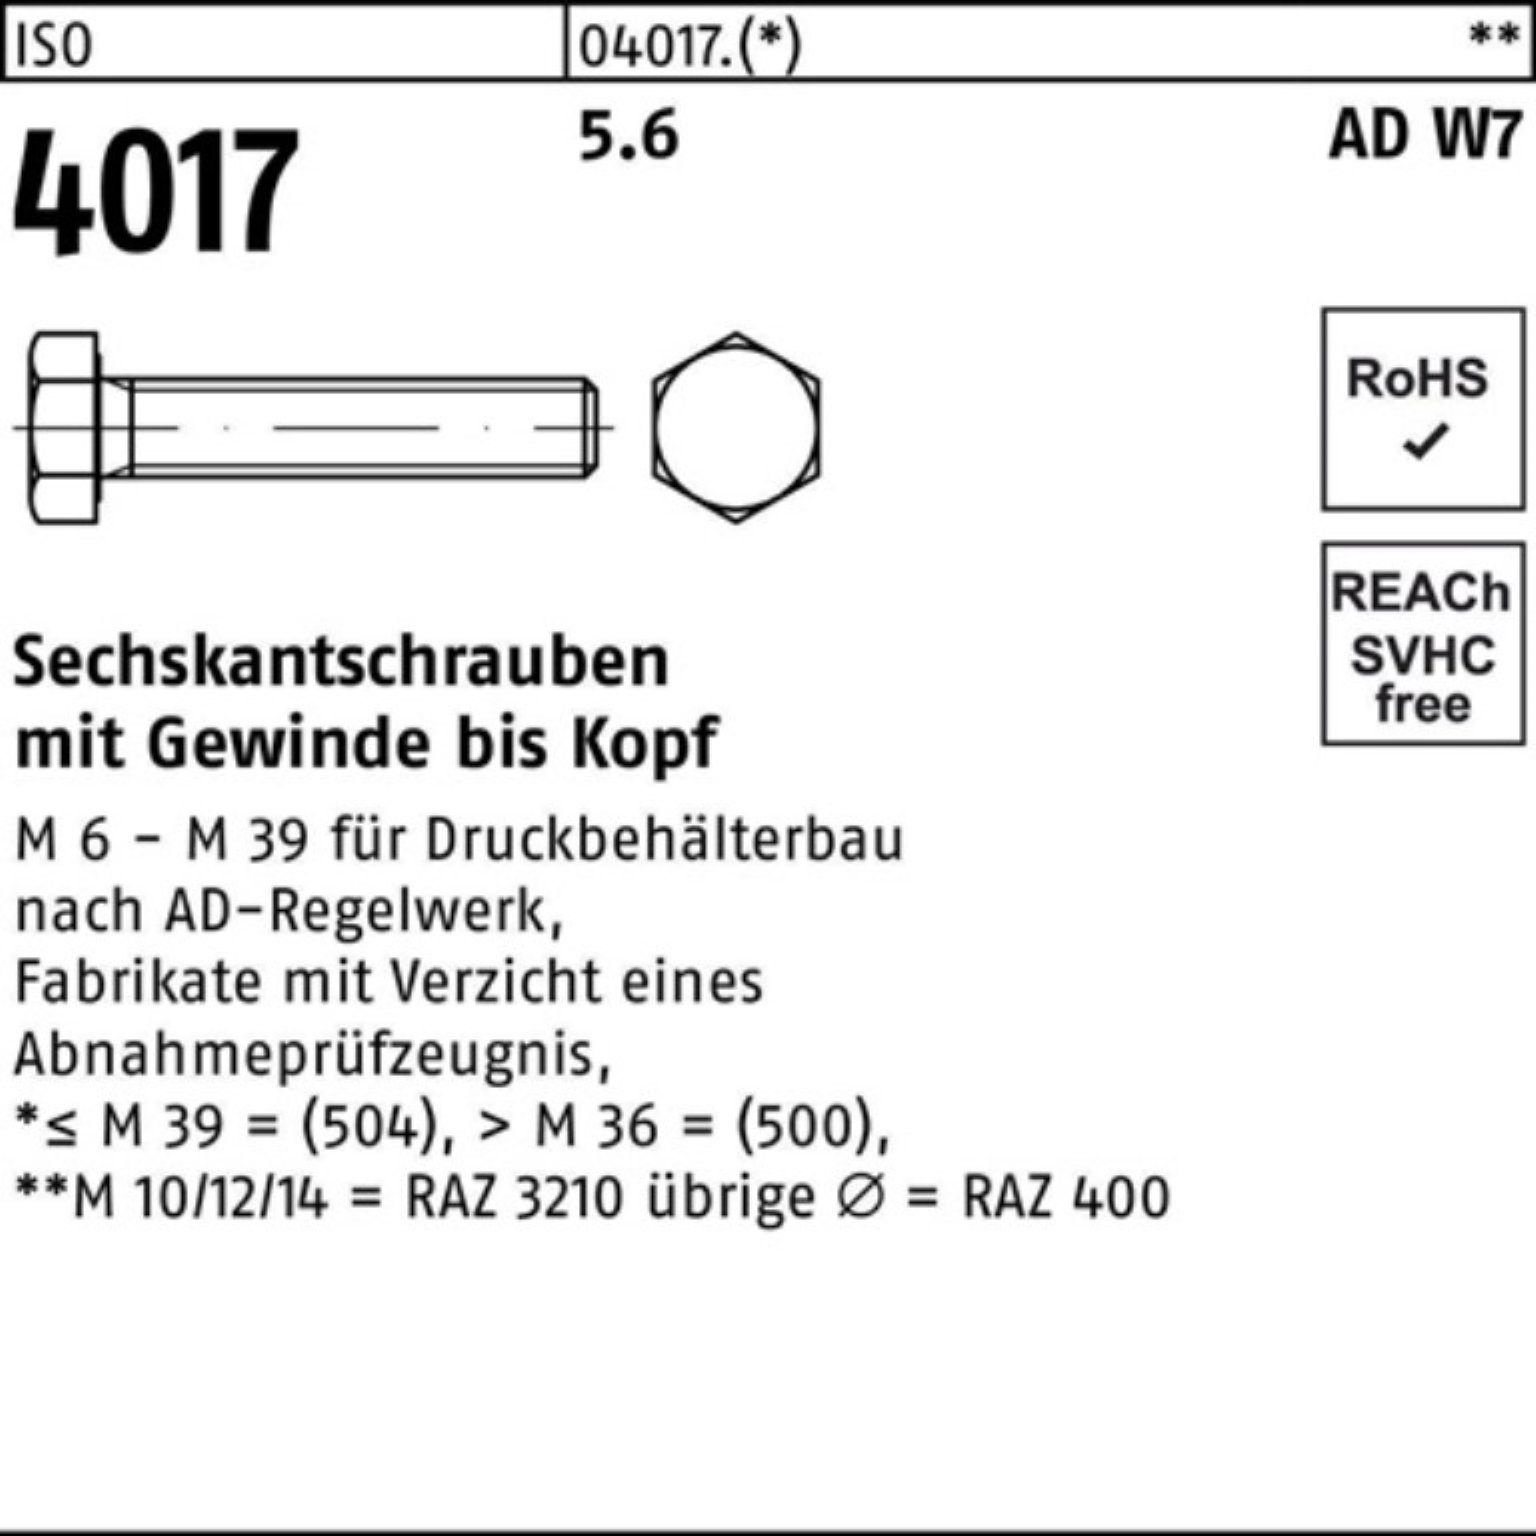 Bufab Sechskantschraube 100er Pack Sechskantschraube ISO 4017 VG M20x 150 5.6 AD W7 25 Stück